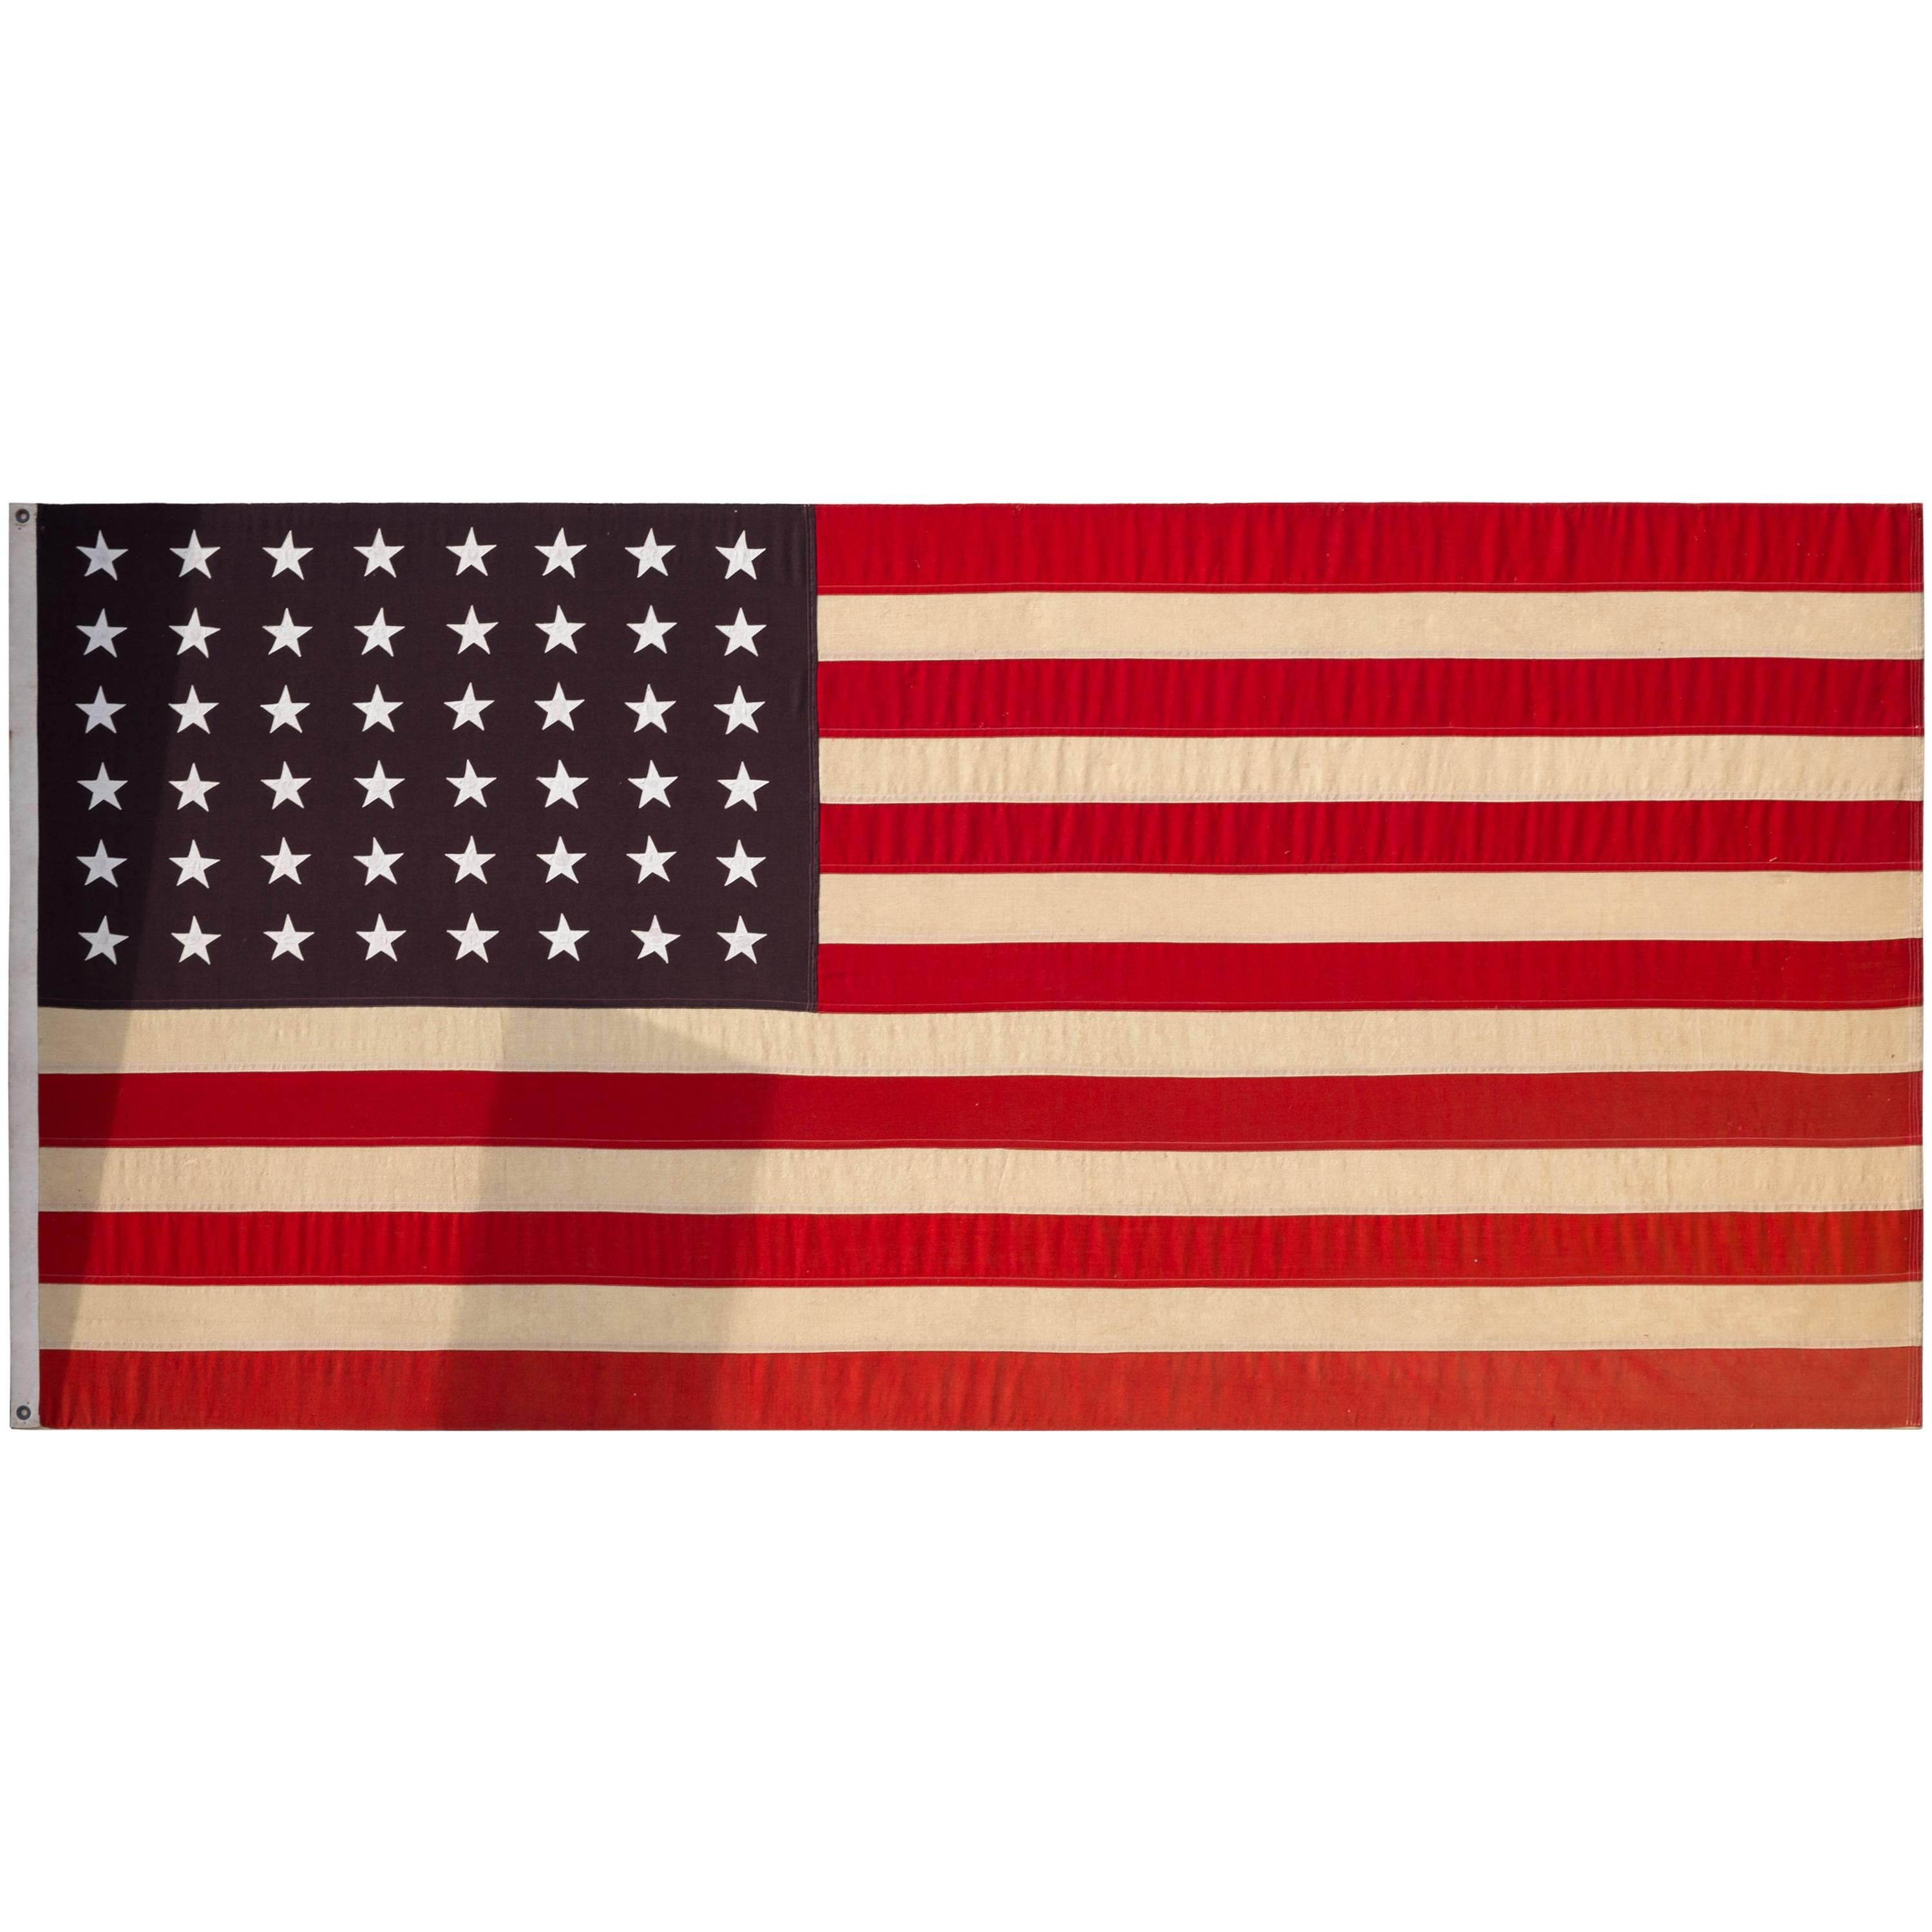 Huge World War Era American Flag